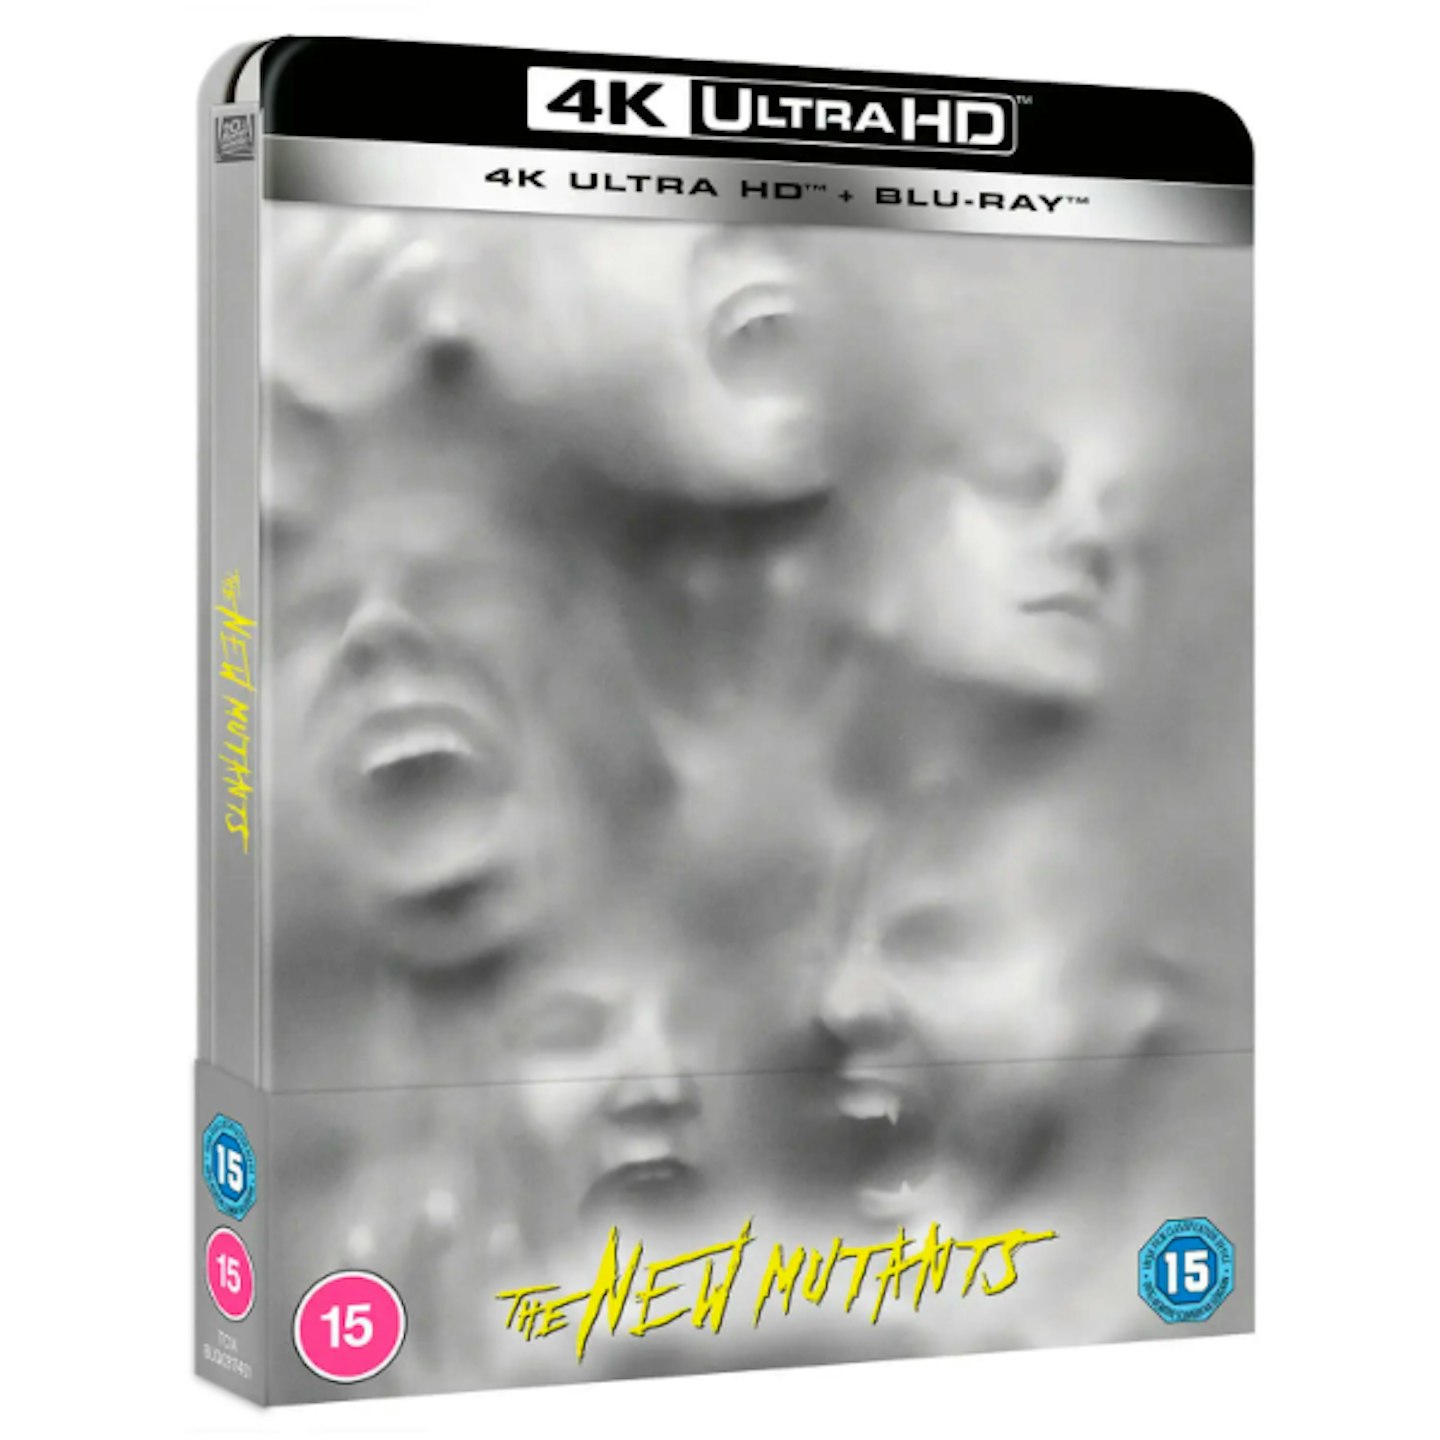 Marvelu2019s New Mutants Zavvi Exclusive 4K UHD Steelbook